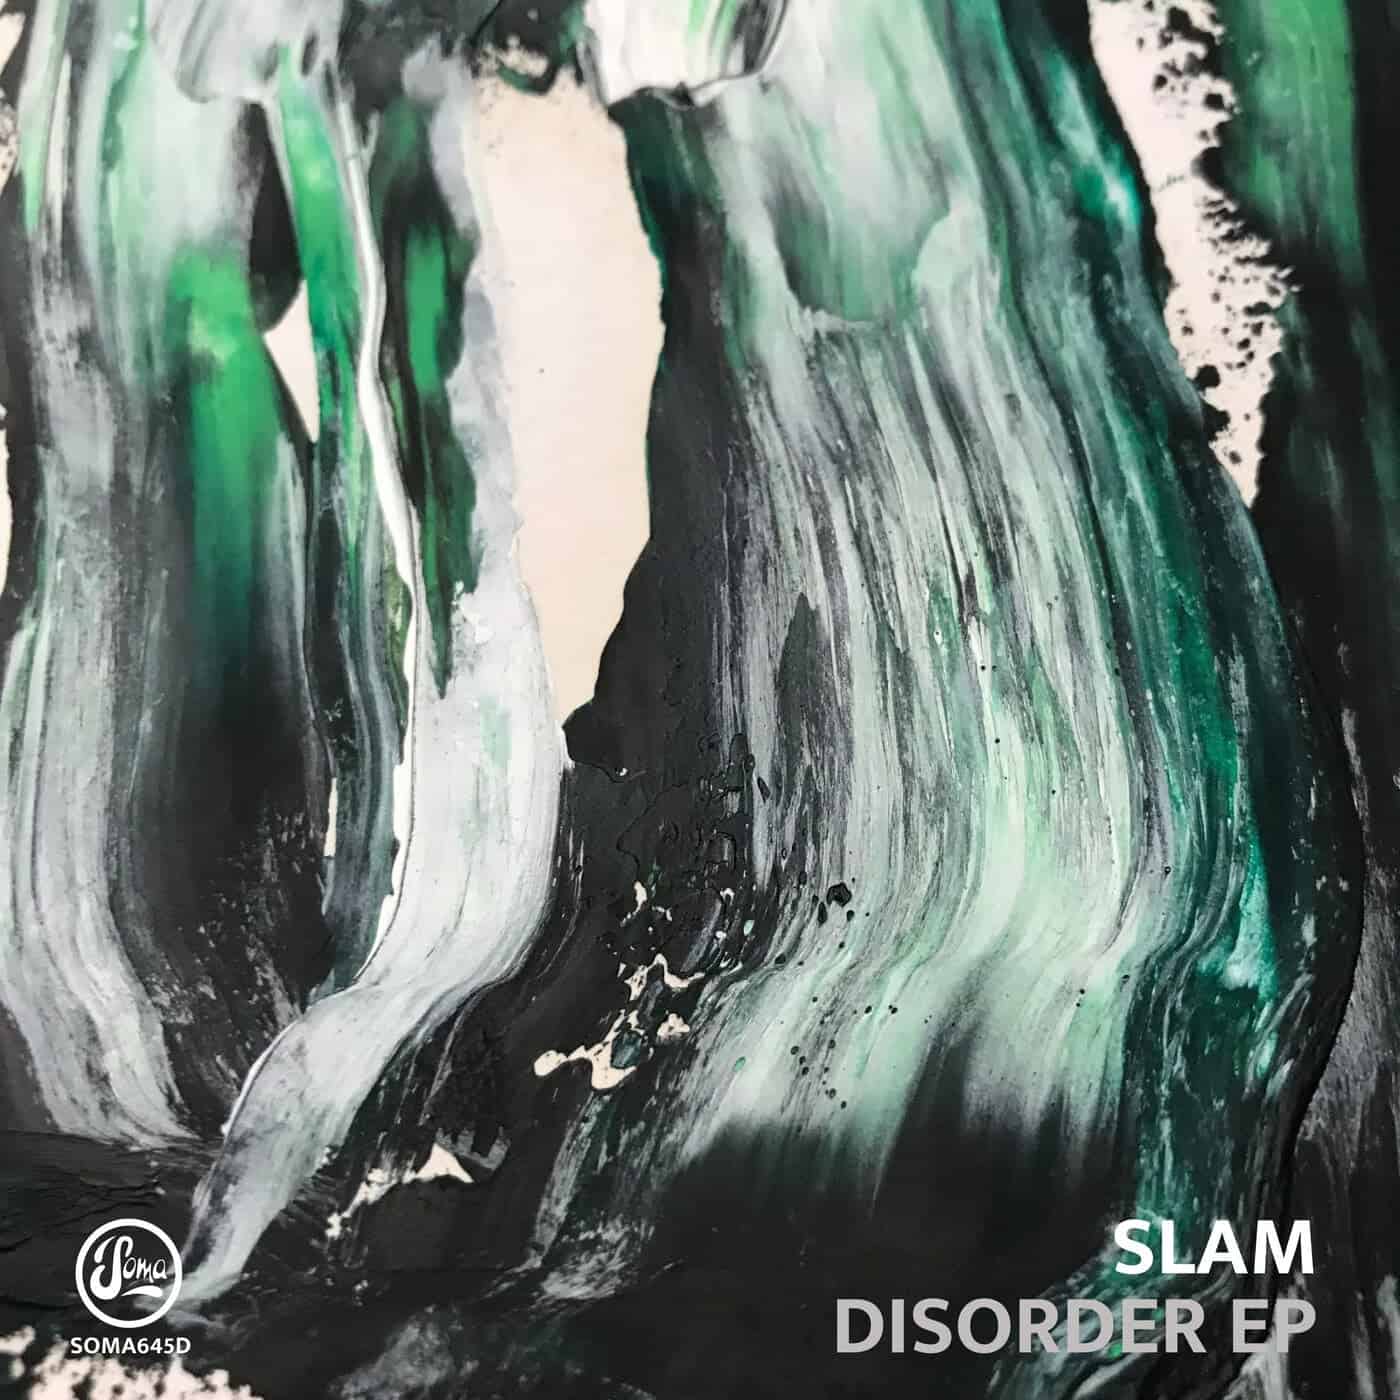 image cover: Slam - Disorder EP / SOMA645D